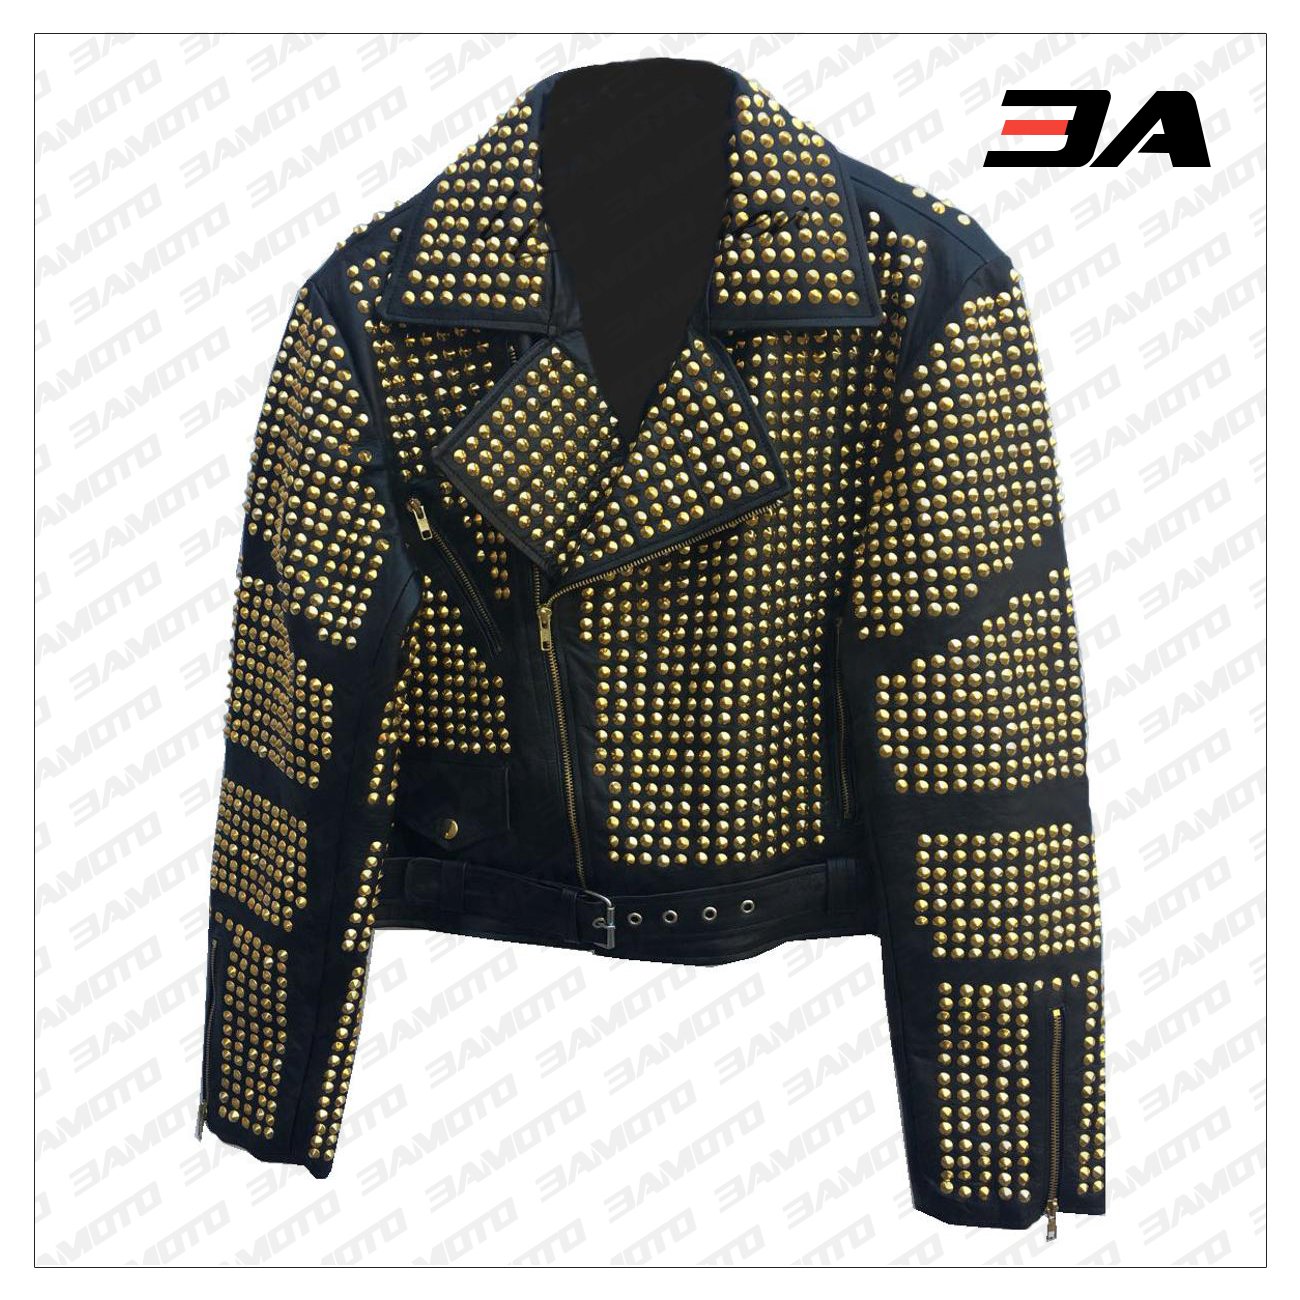 Handmade Womens Black Fashion Golden Studded Punk Style Leather Jacket - 3A MOTO LEATHER